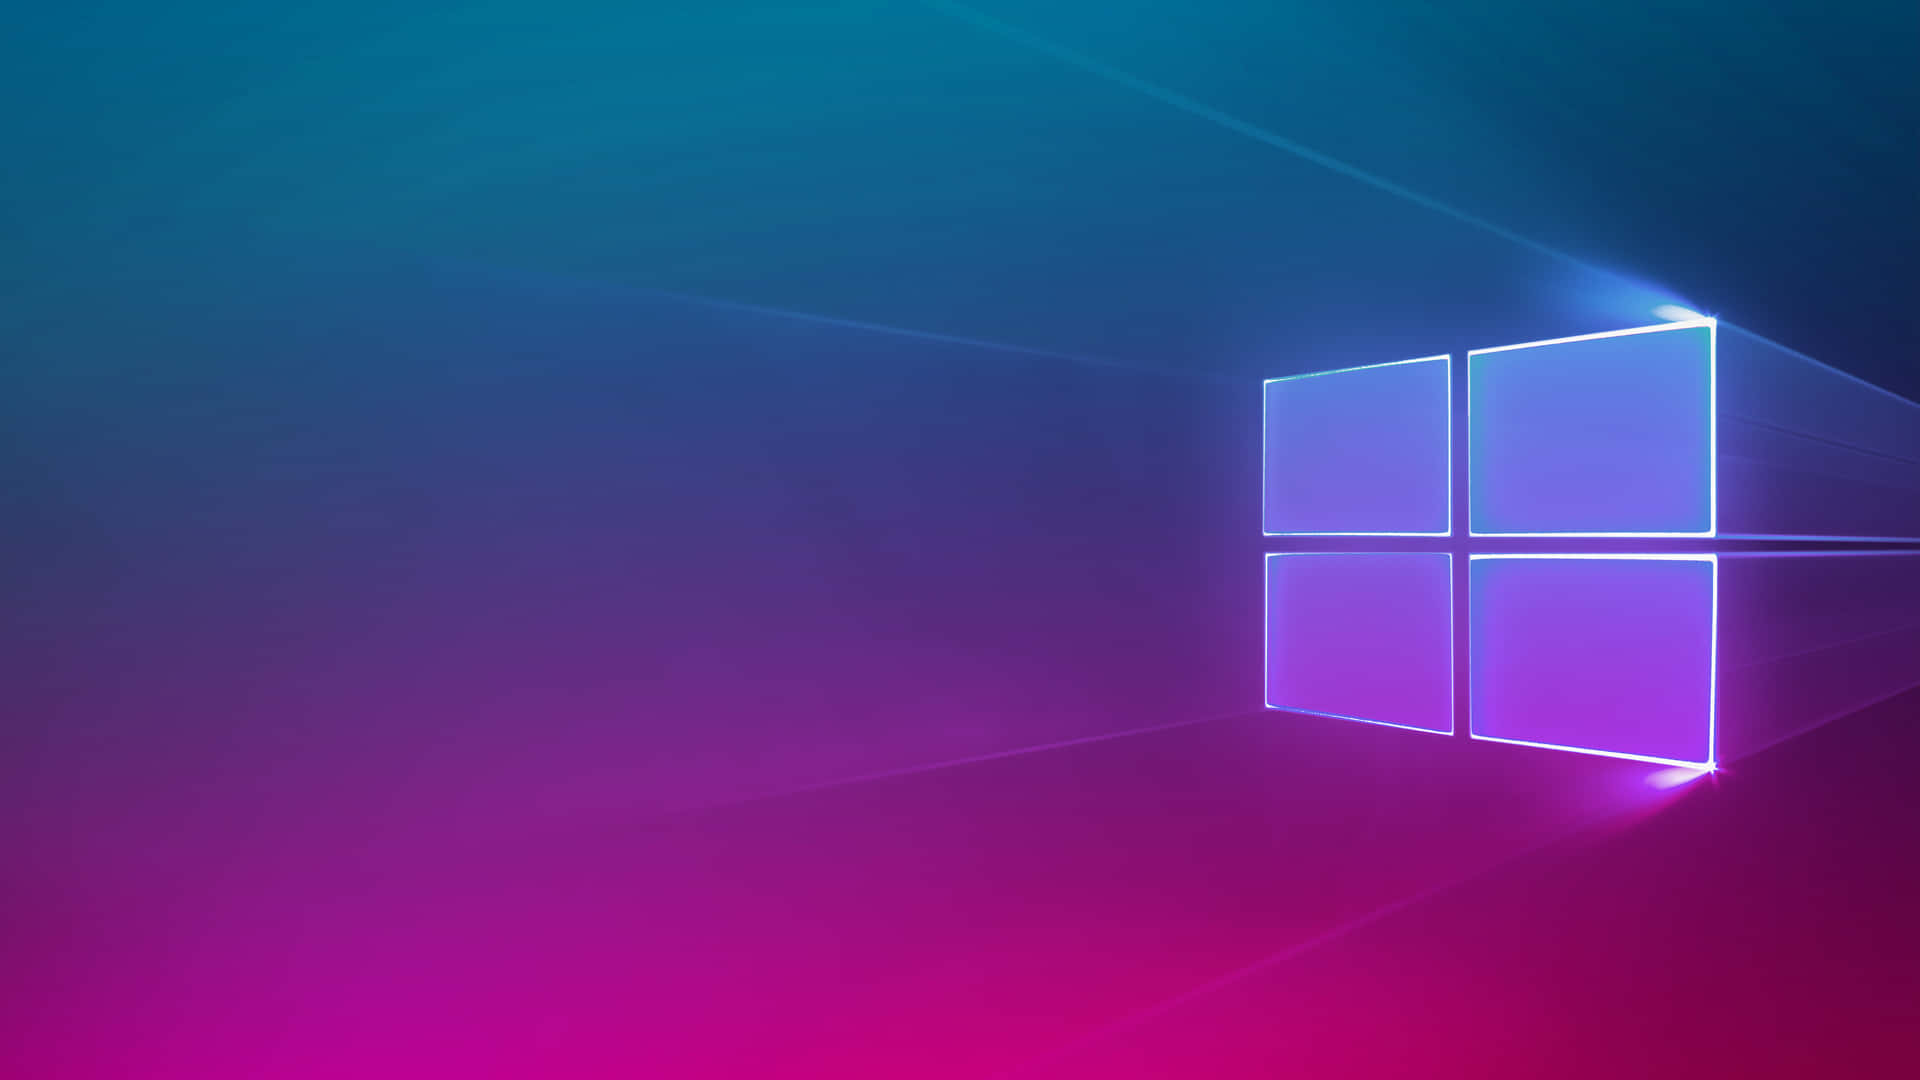 Illuminate Your Workspace with Windows 10